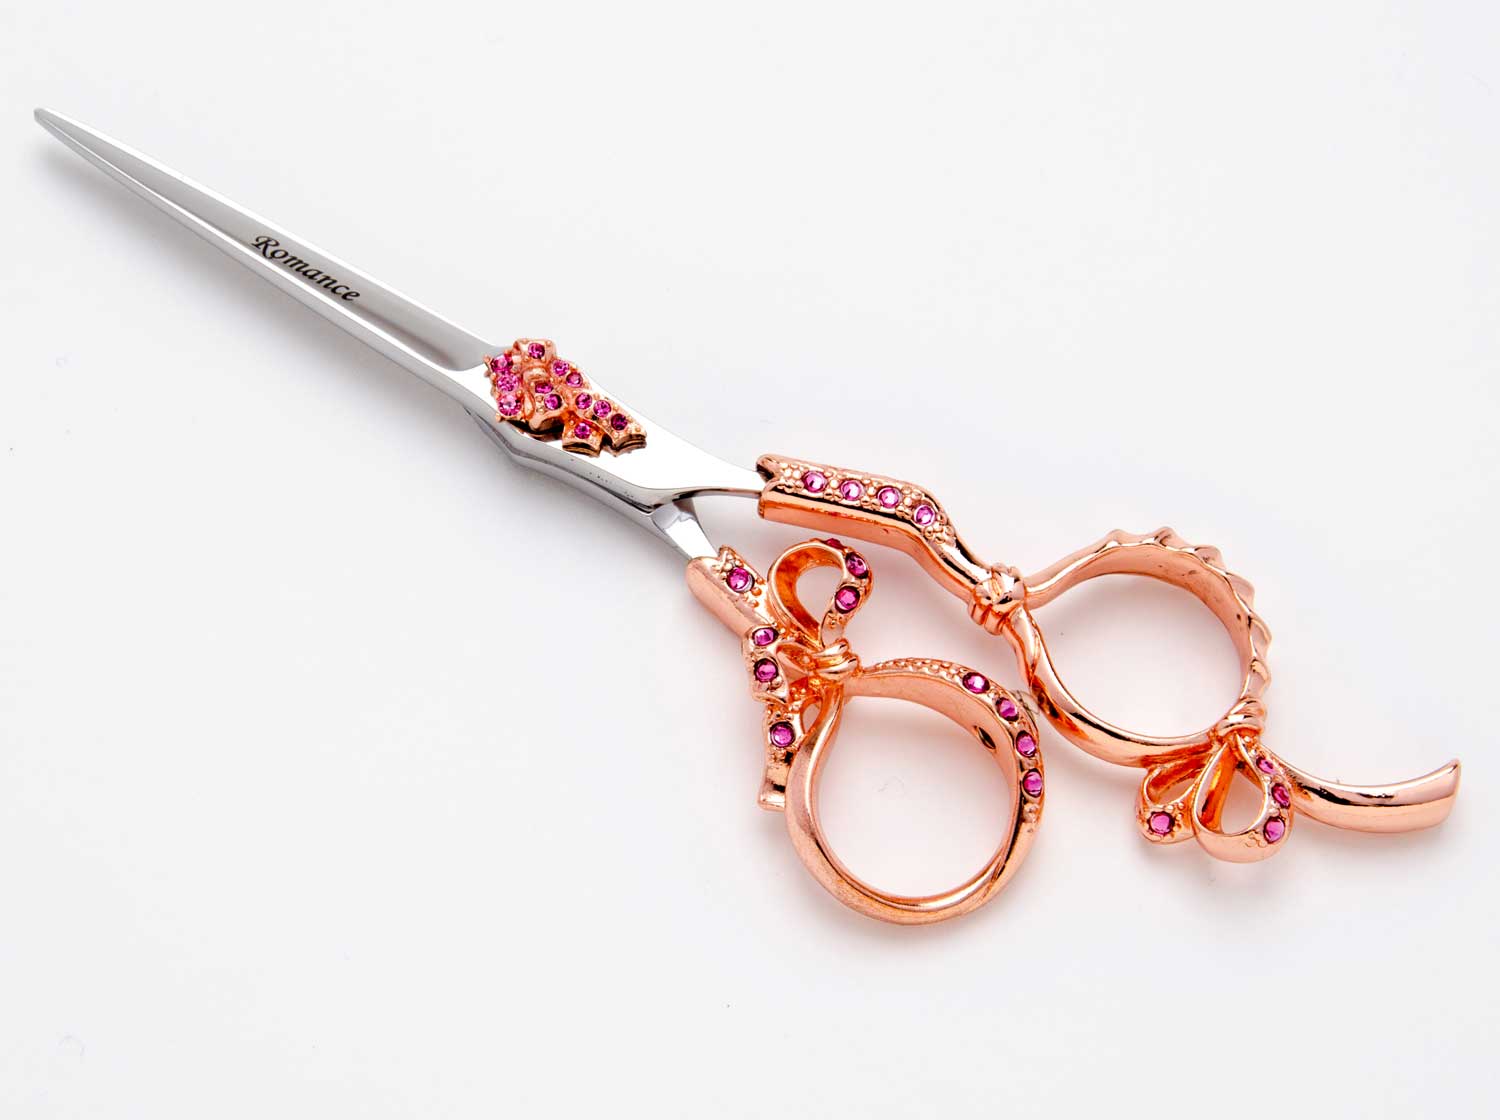 mirage-romance-pink-handle-diamond-ribbon-narrow-blades-hair-cutting-shear.jpg